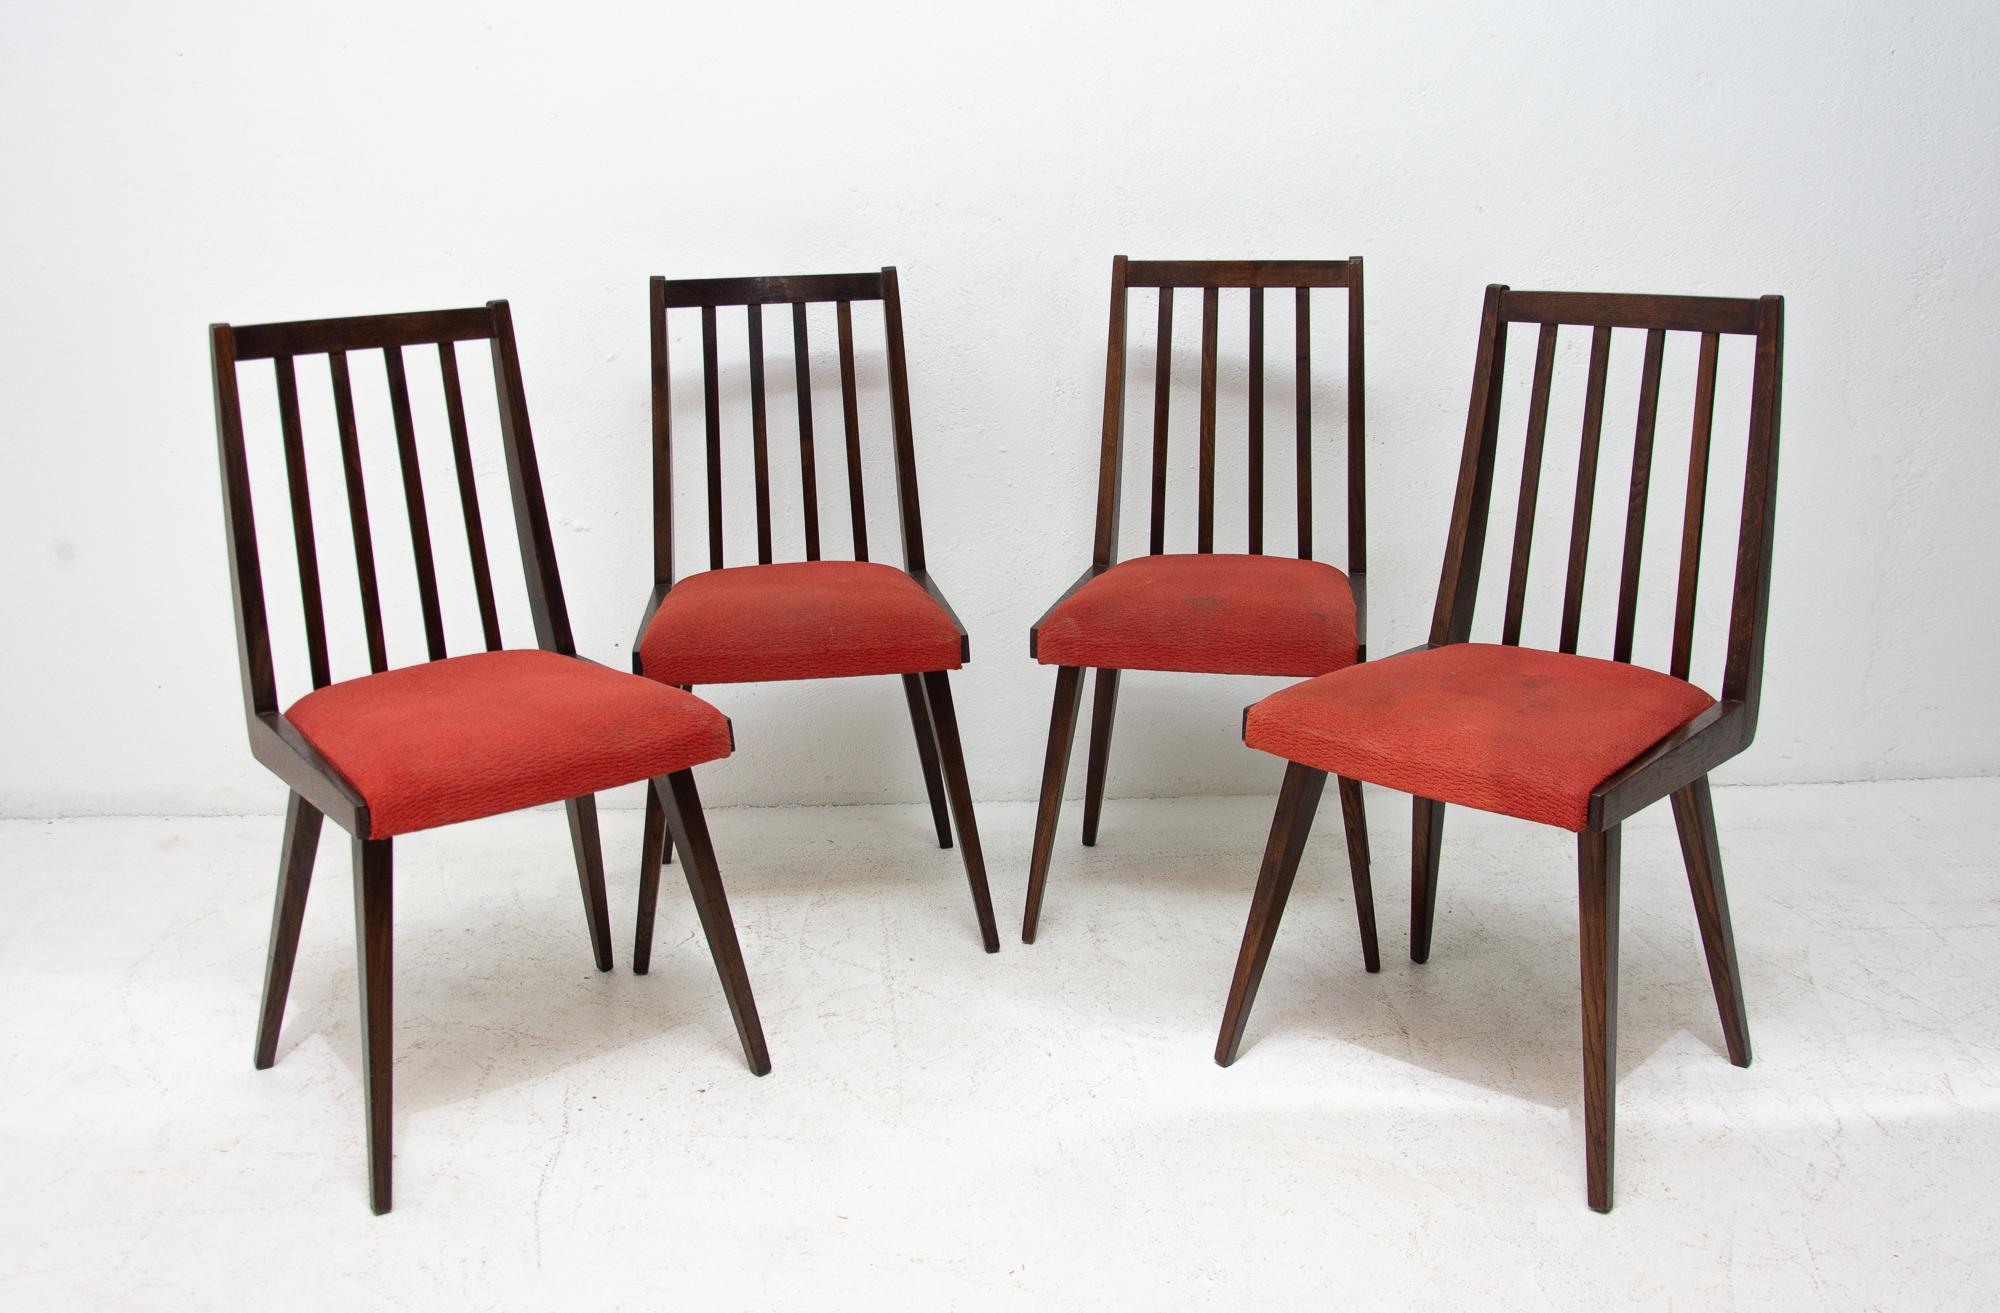 20th Century Midcentury Dining Chairs by Jiří Jiroutek for Interiér Praha, 1960s For Sale